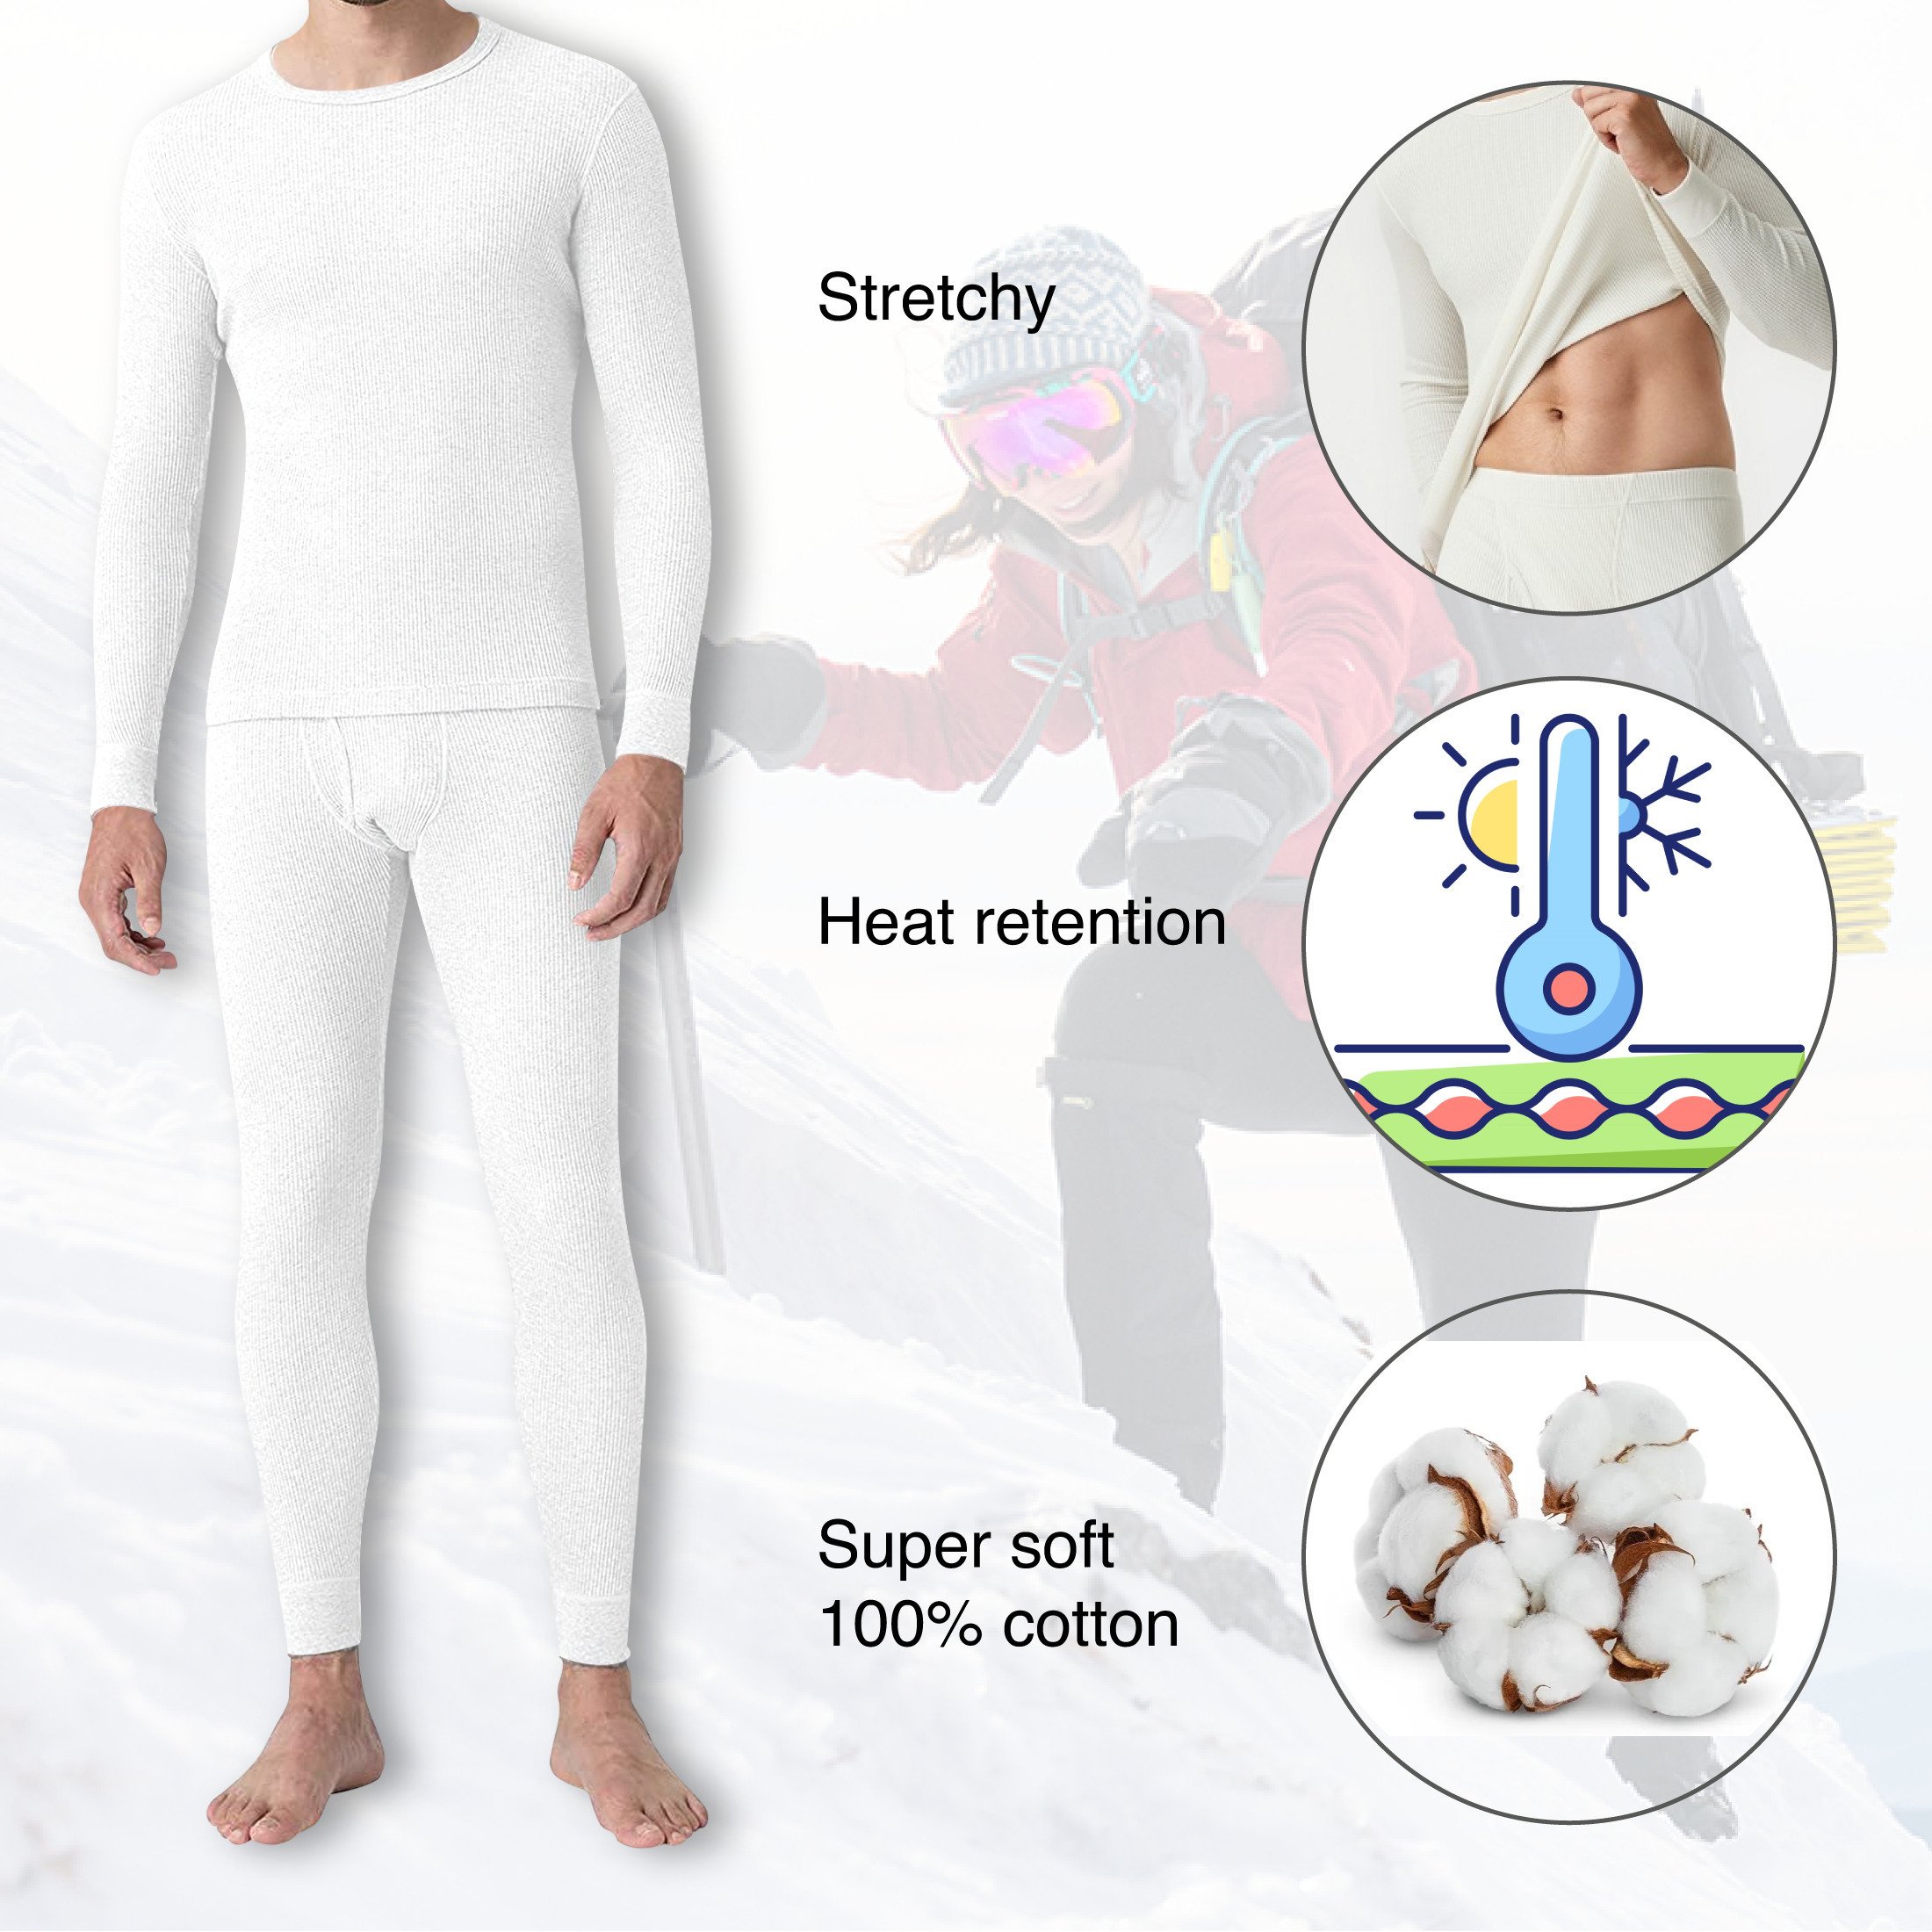 2-Sets: Men's Super Soft Cotton Waffle Knit Winter Thermal Underwear Set - White & White, Small